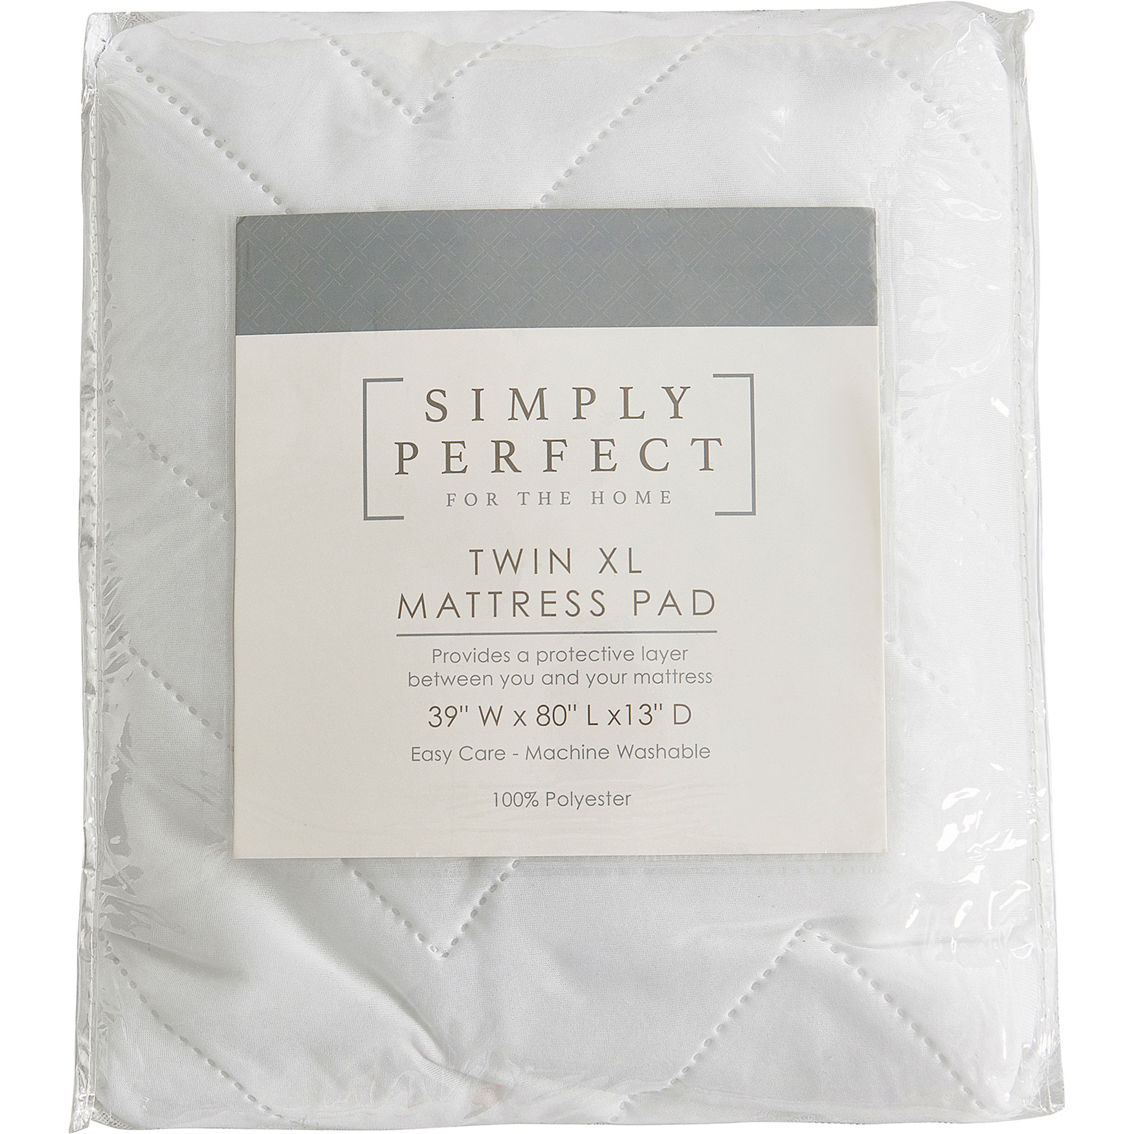 Simply Perfect Mattress Pad - Image 3 of 8